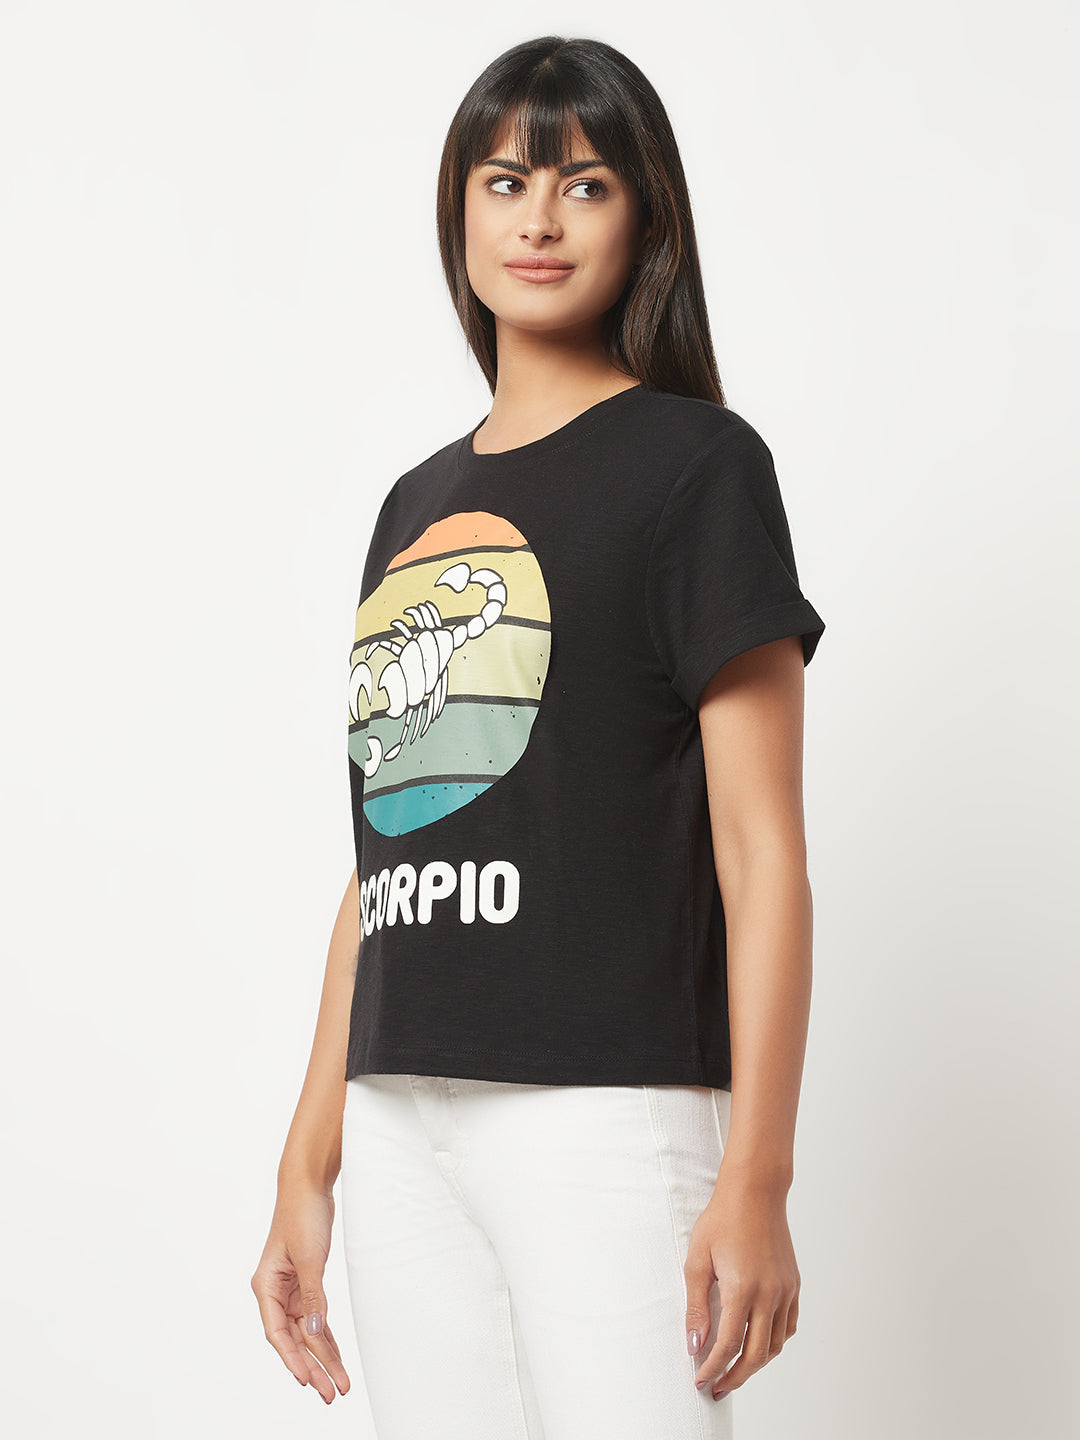 Scorpio zodiac sign t-shirt